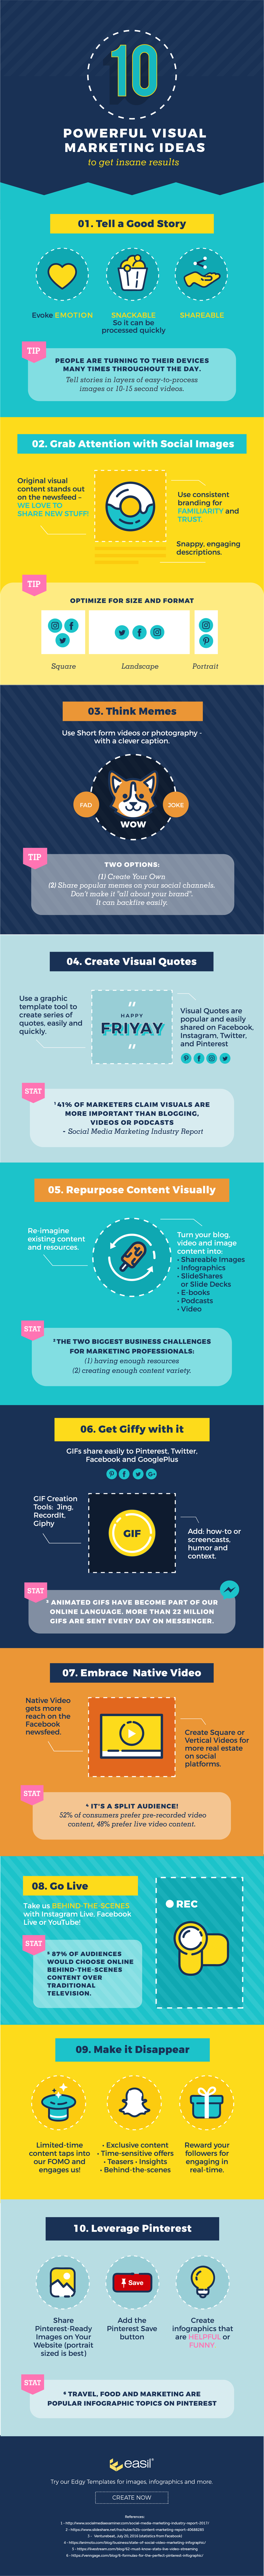 10 Visual Marketing Ideas Infographic